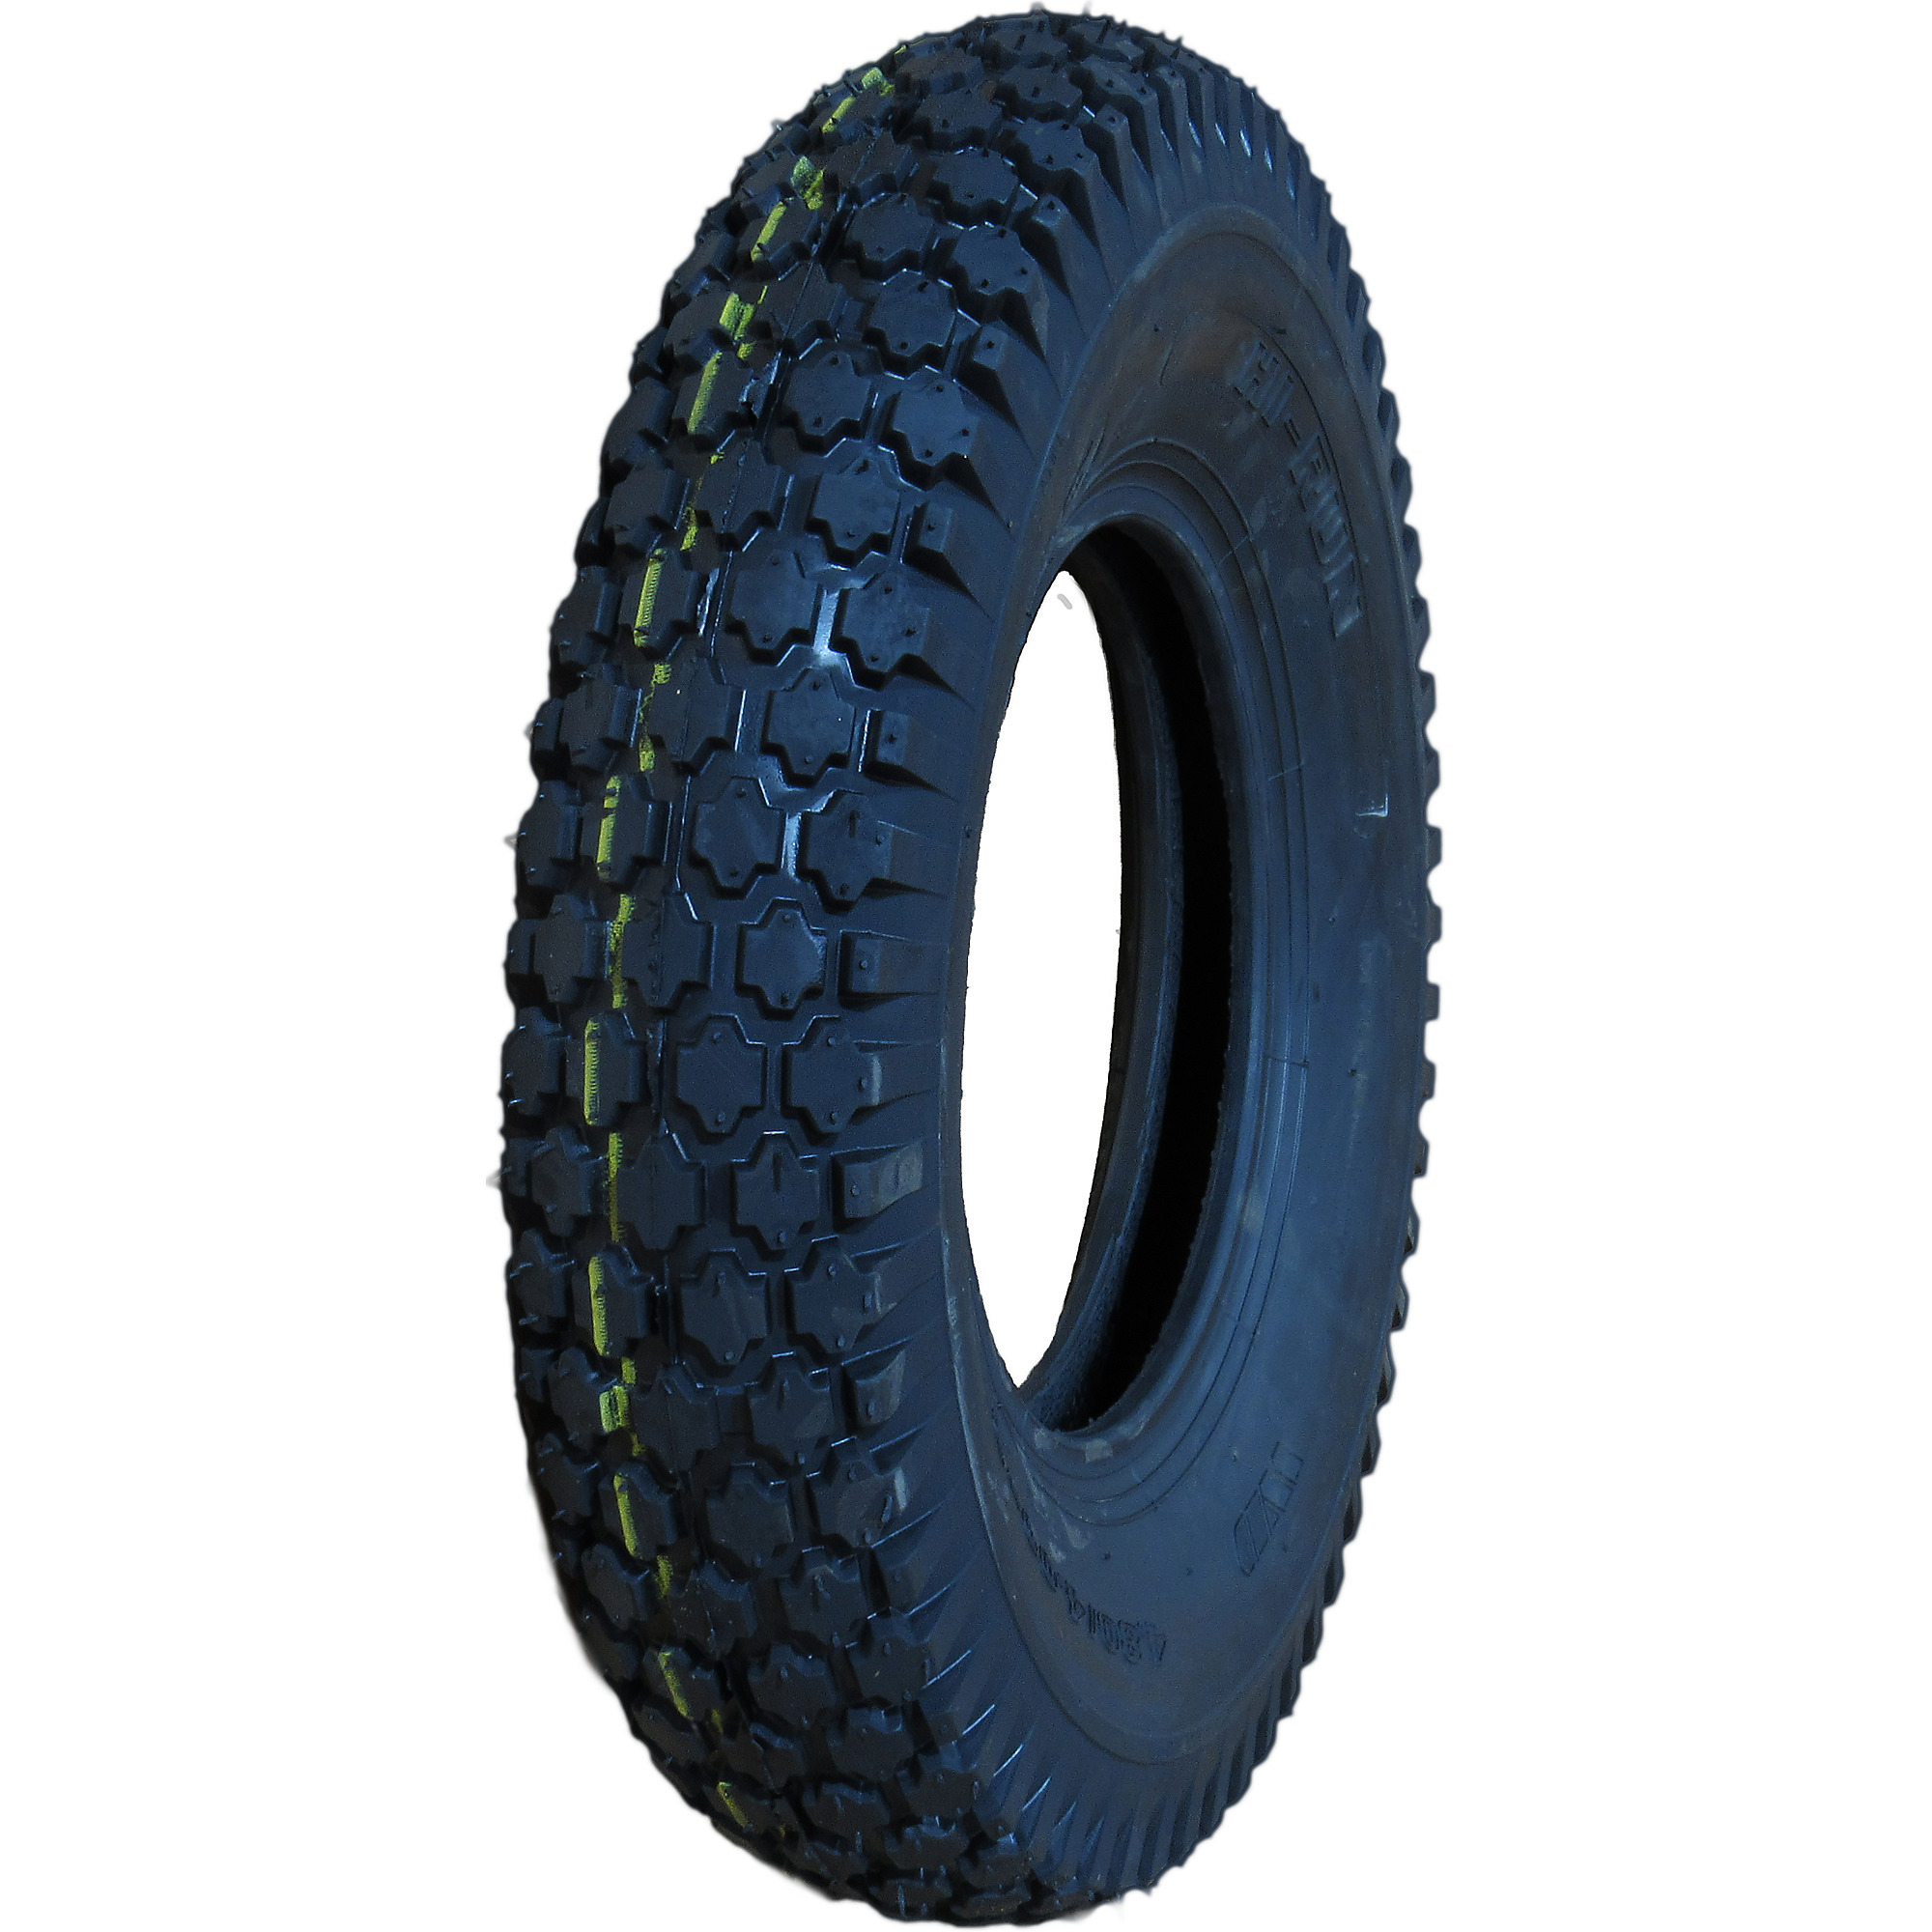 Lawn Garden Tire, Stud, Tire Size 4.80/4.00-8, Load Range Rating A, Model - HI-RUN WD1300